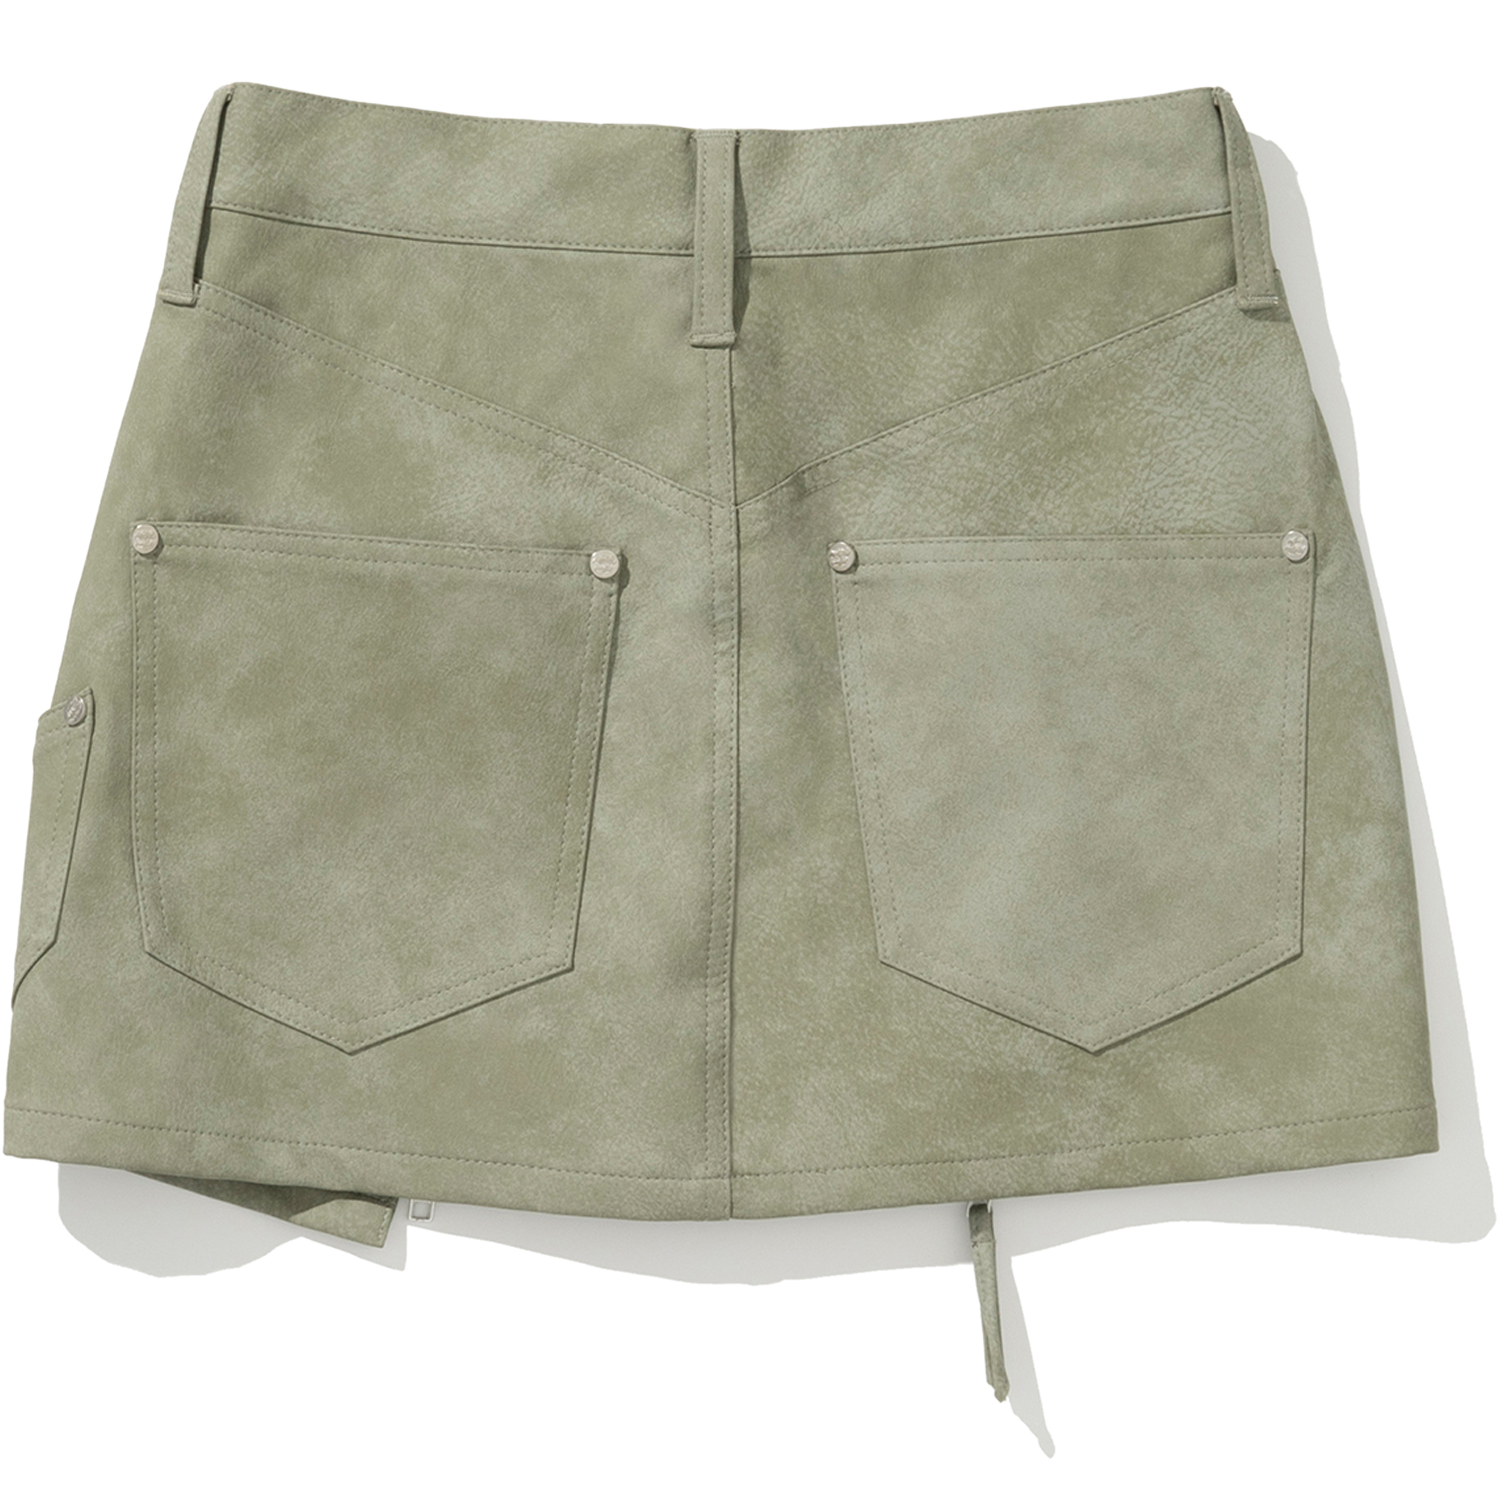 W Vintage Leather Zipper Mini Skirt - Light Khaki,NOT4NERD